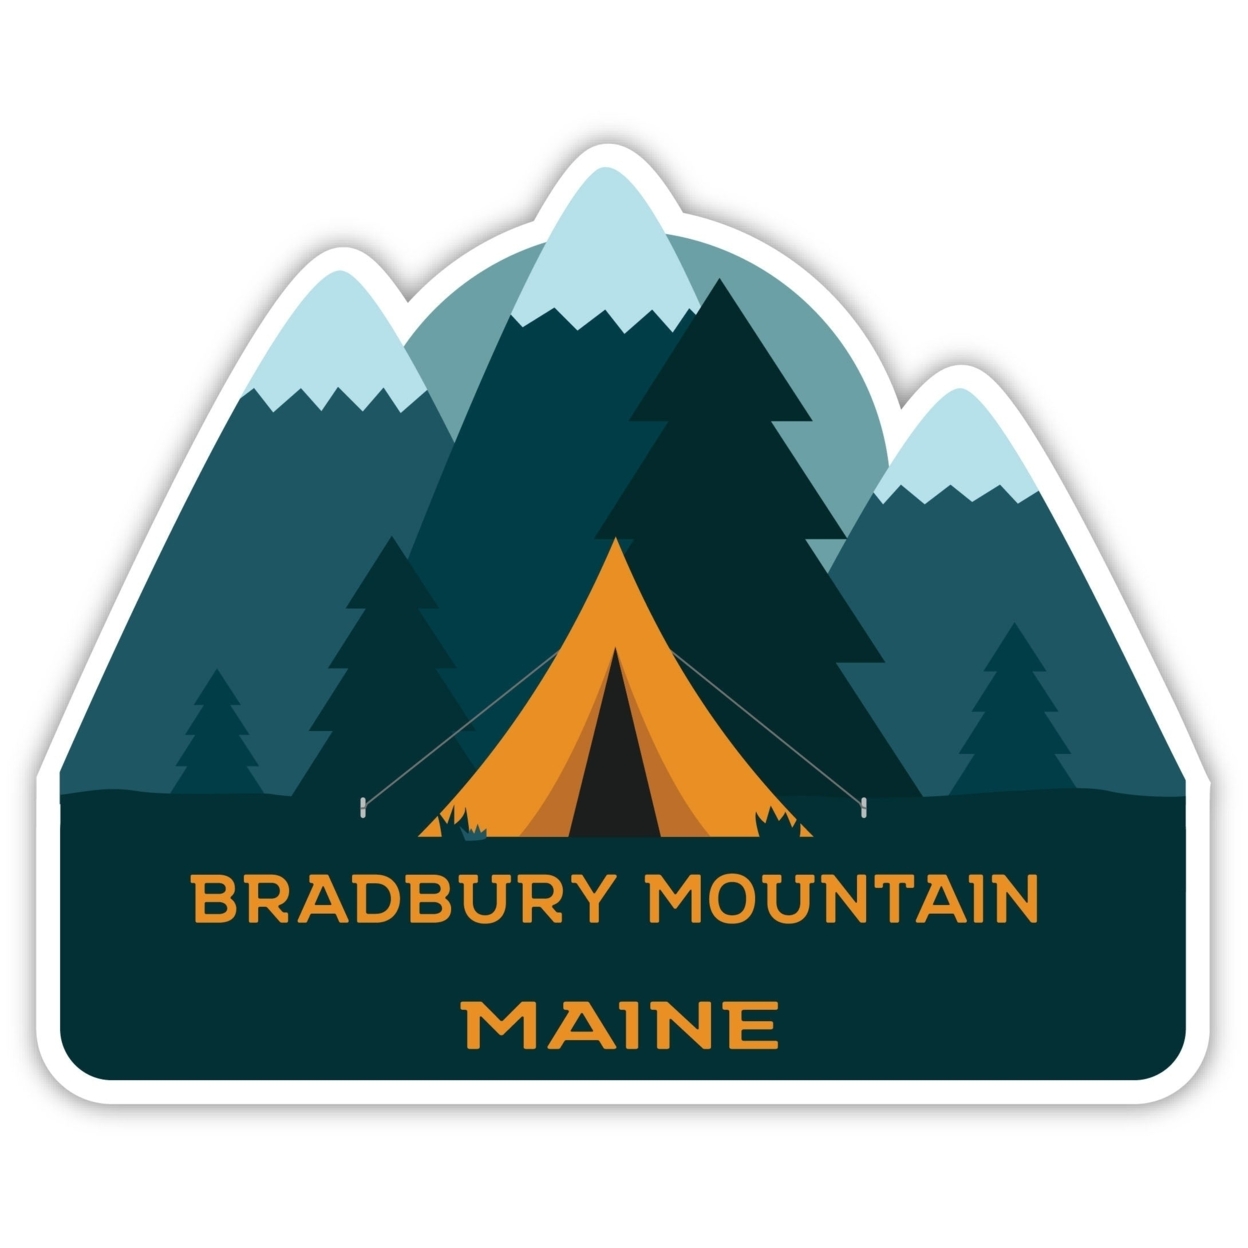 Bradbury Mountain Maine Souvenir Decorative Stickers (Choose Theme And Size) - 4-Pack, 2-Inch, Tent